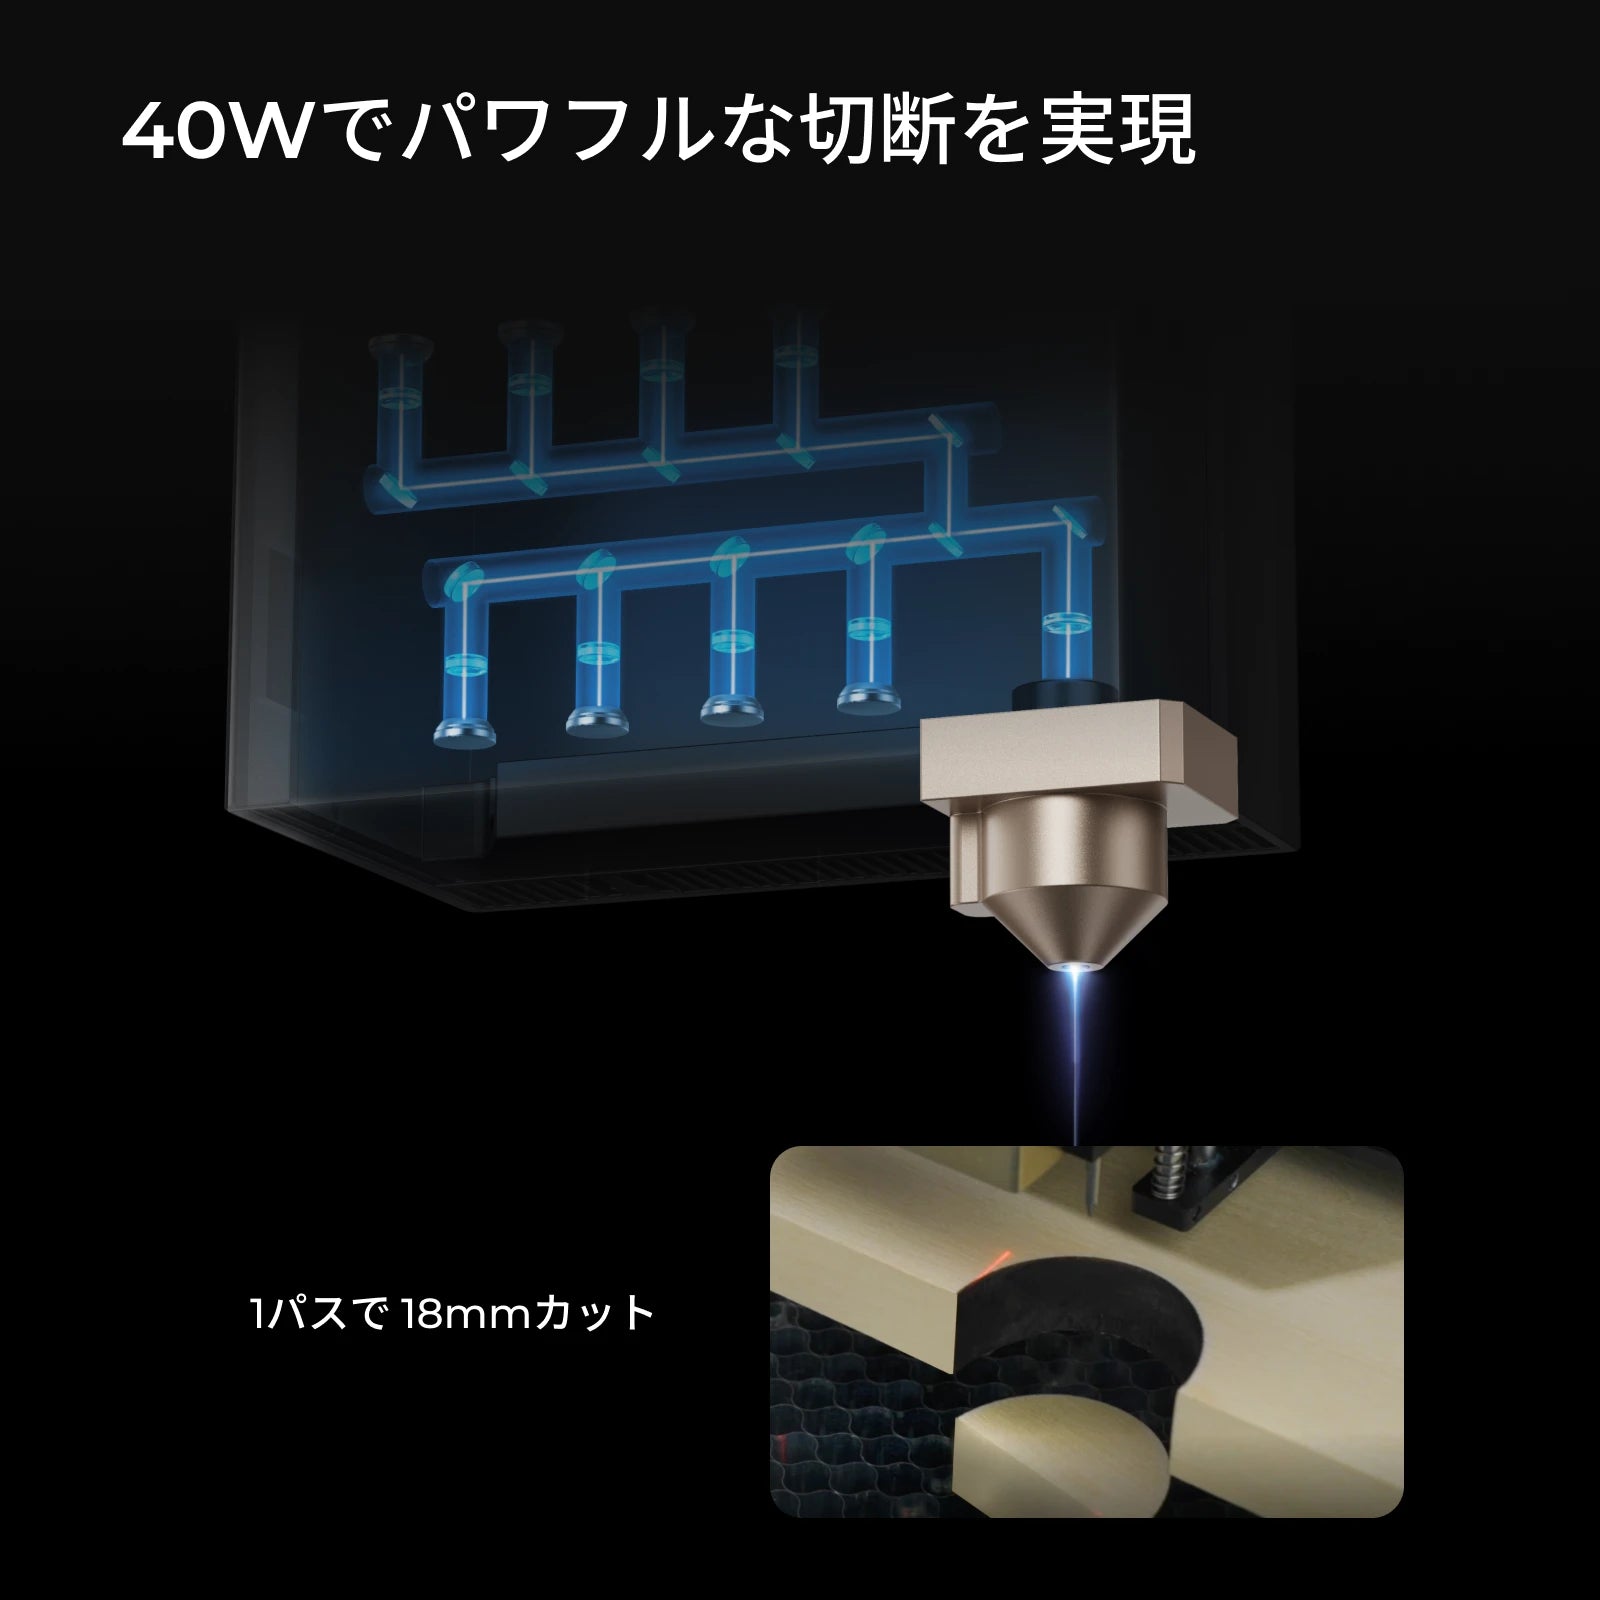 xTool S1 20W/40W密閉型ダイオード レーザー カッター